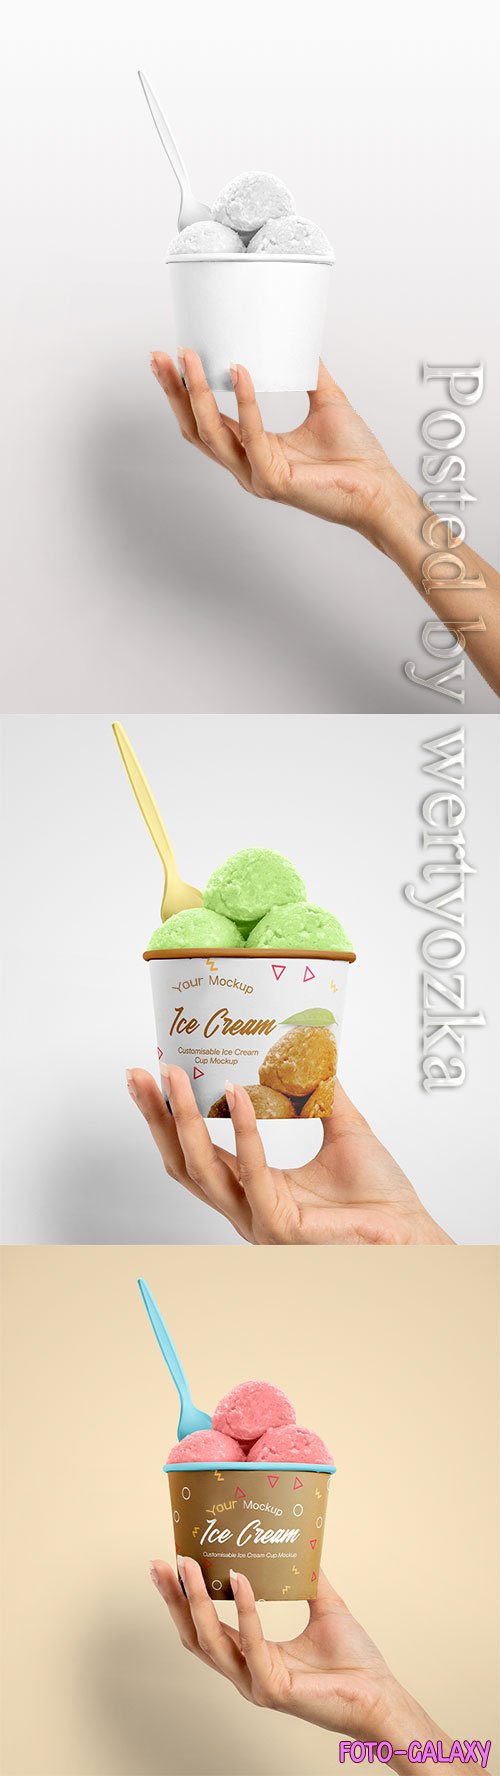 Ice Cream Cup Mockup PSD